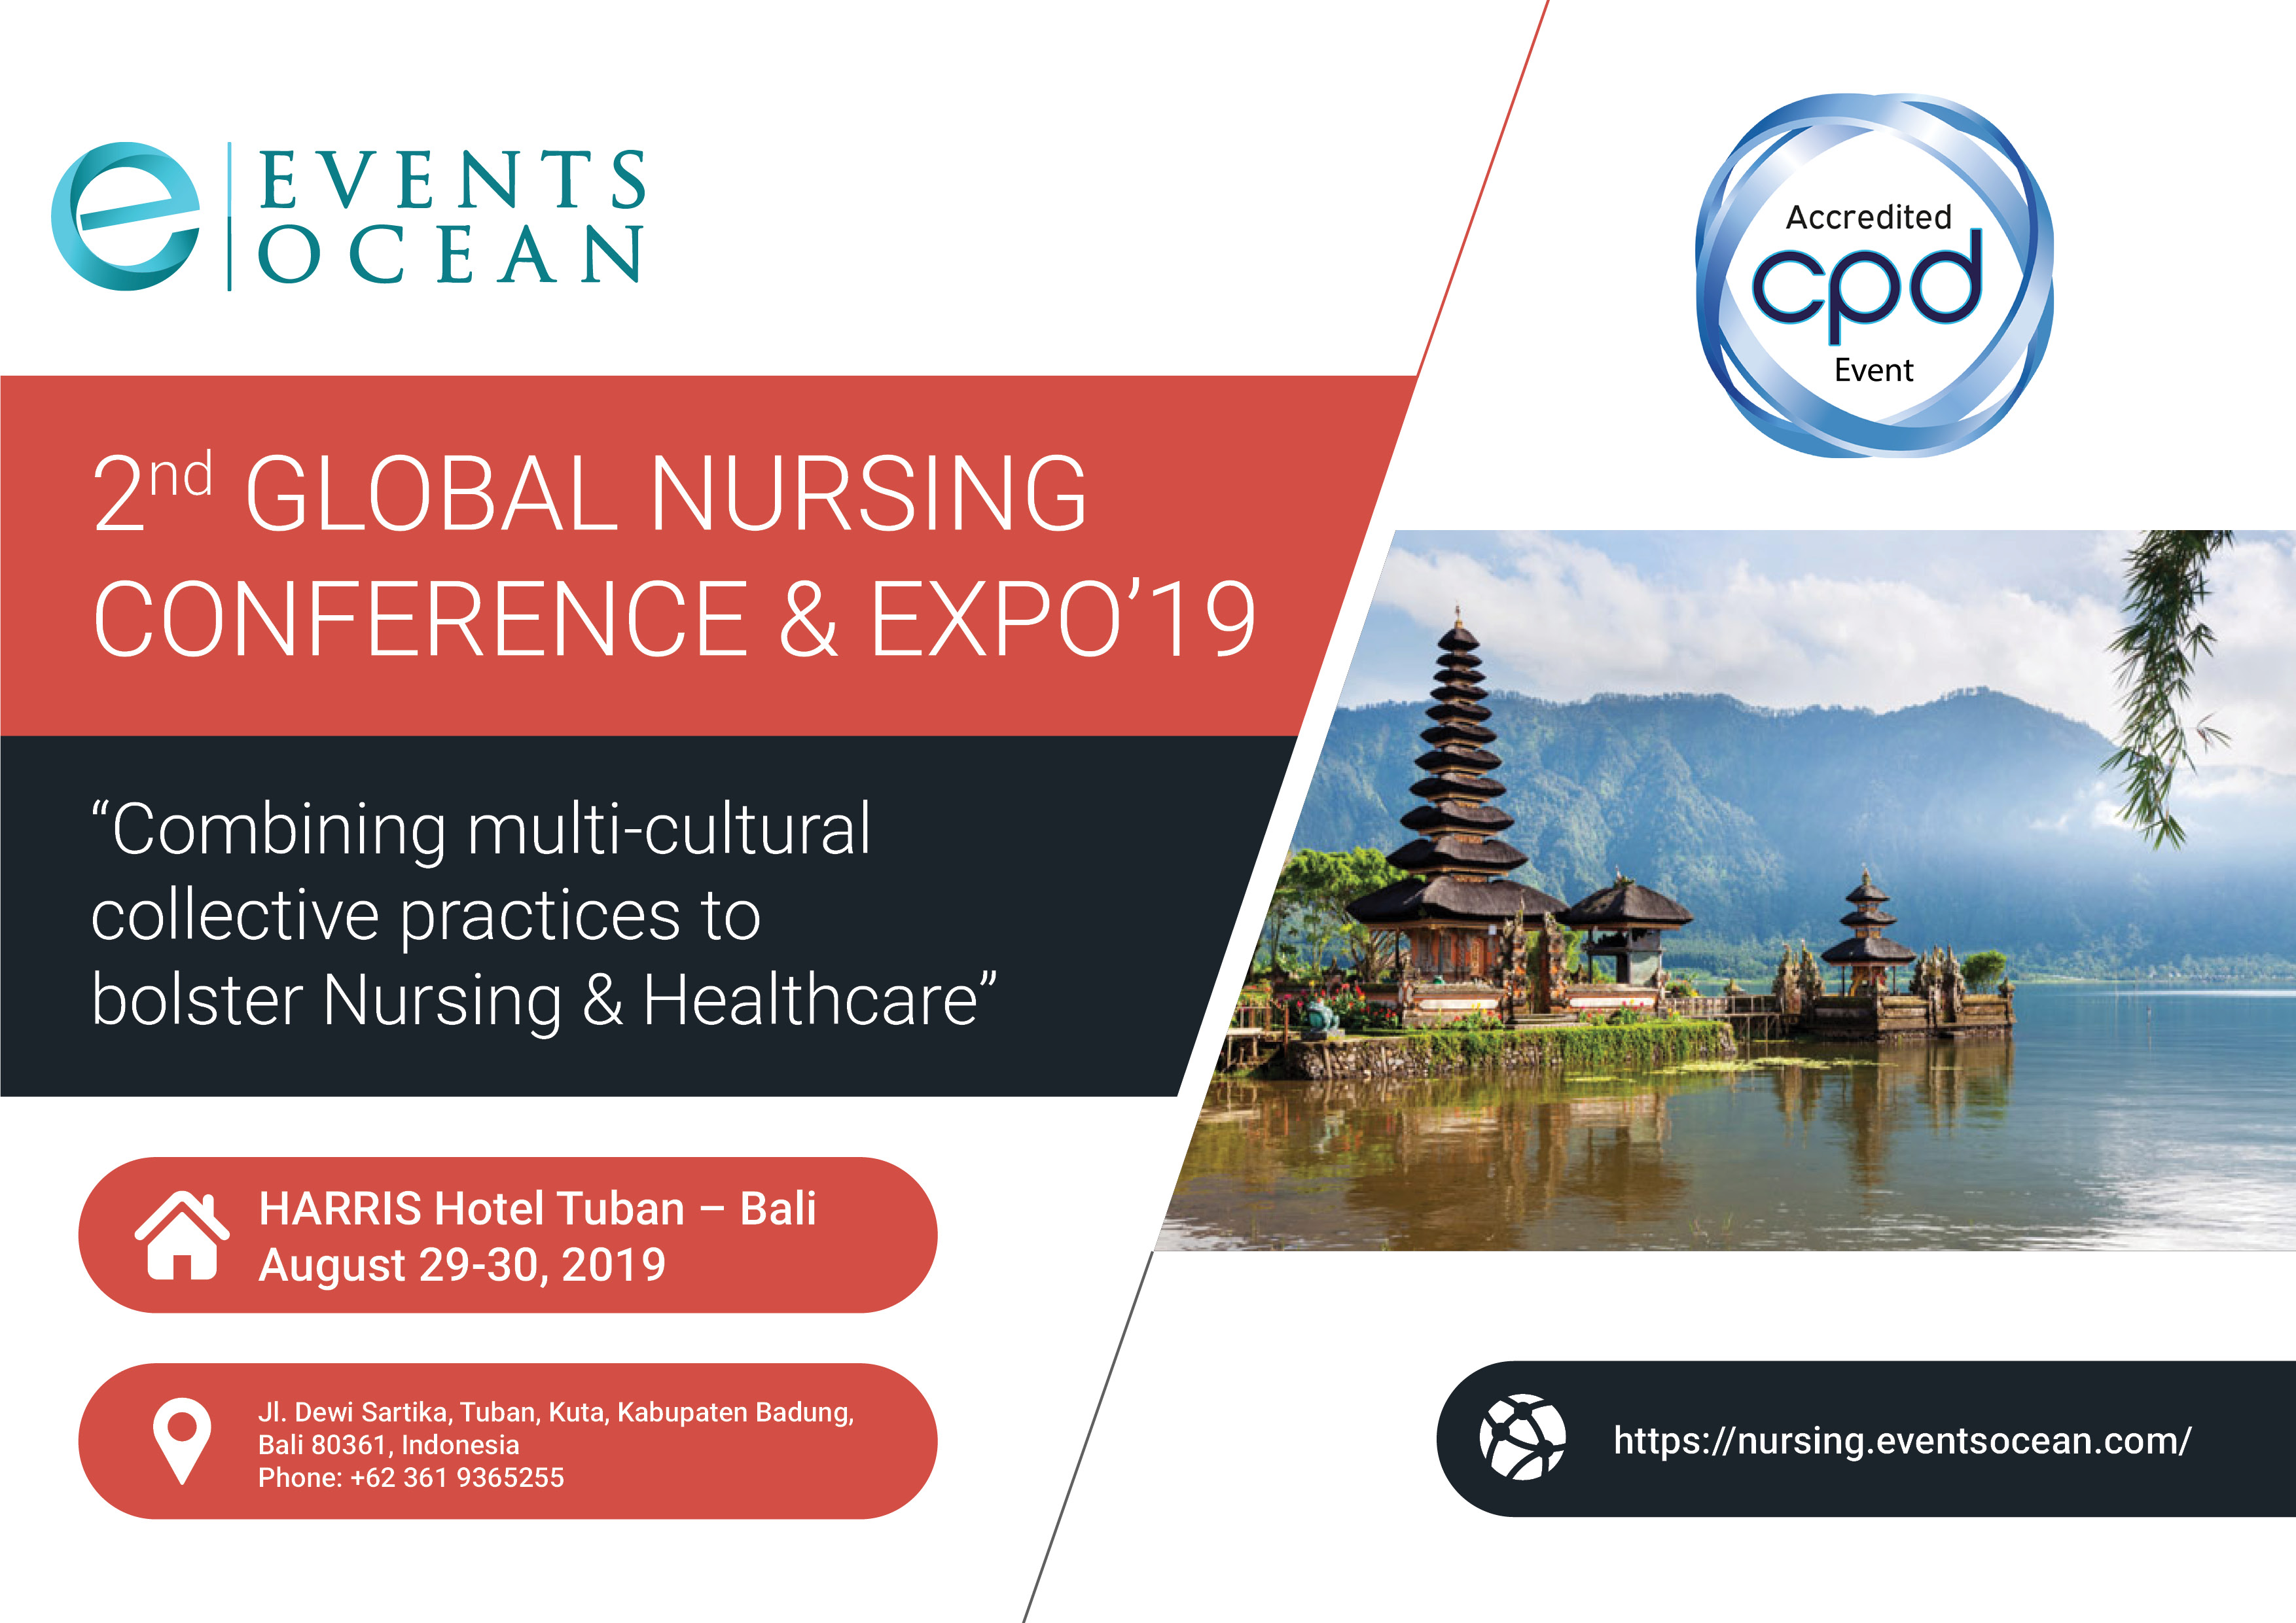 2nd Global Nursing Conference & Expo, Denpasar, Bali, Indonesia